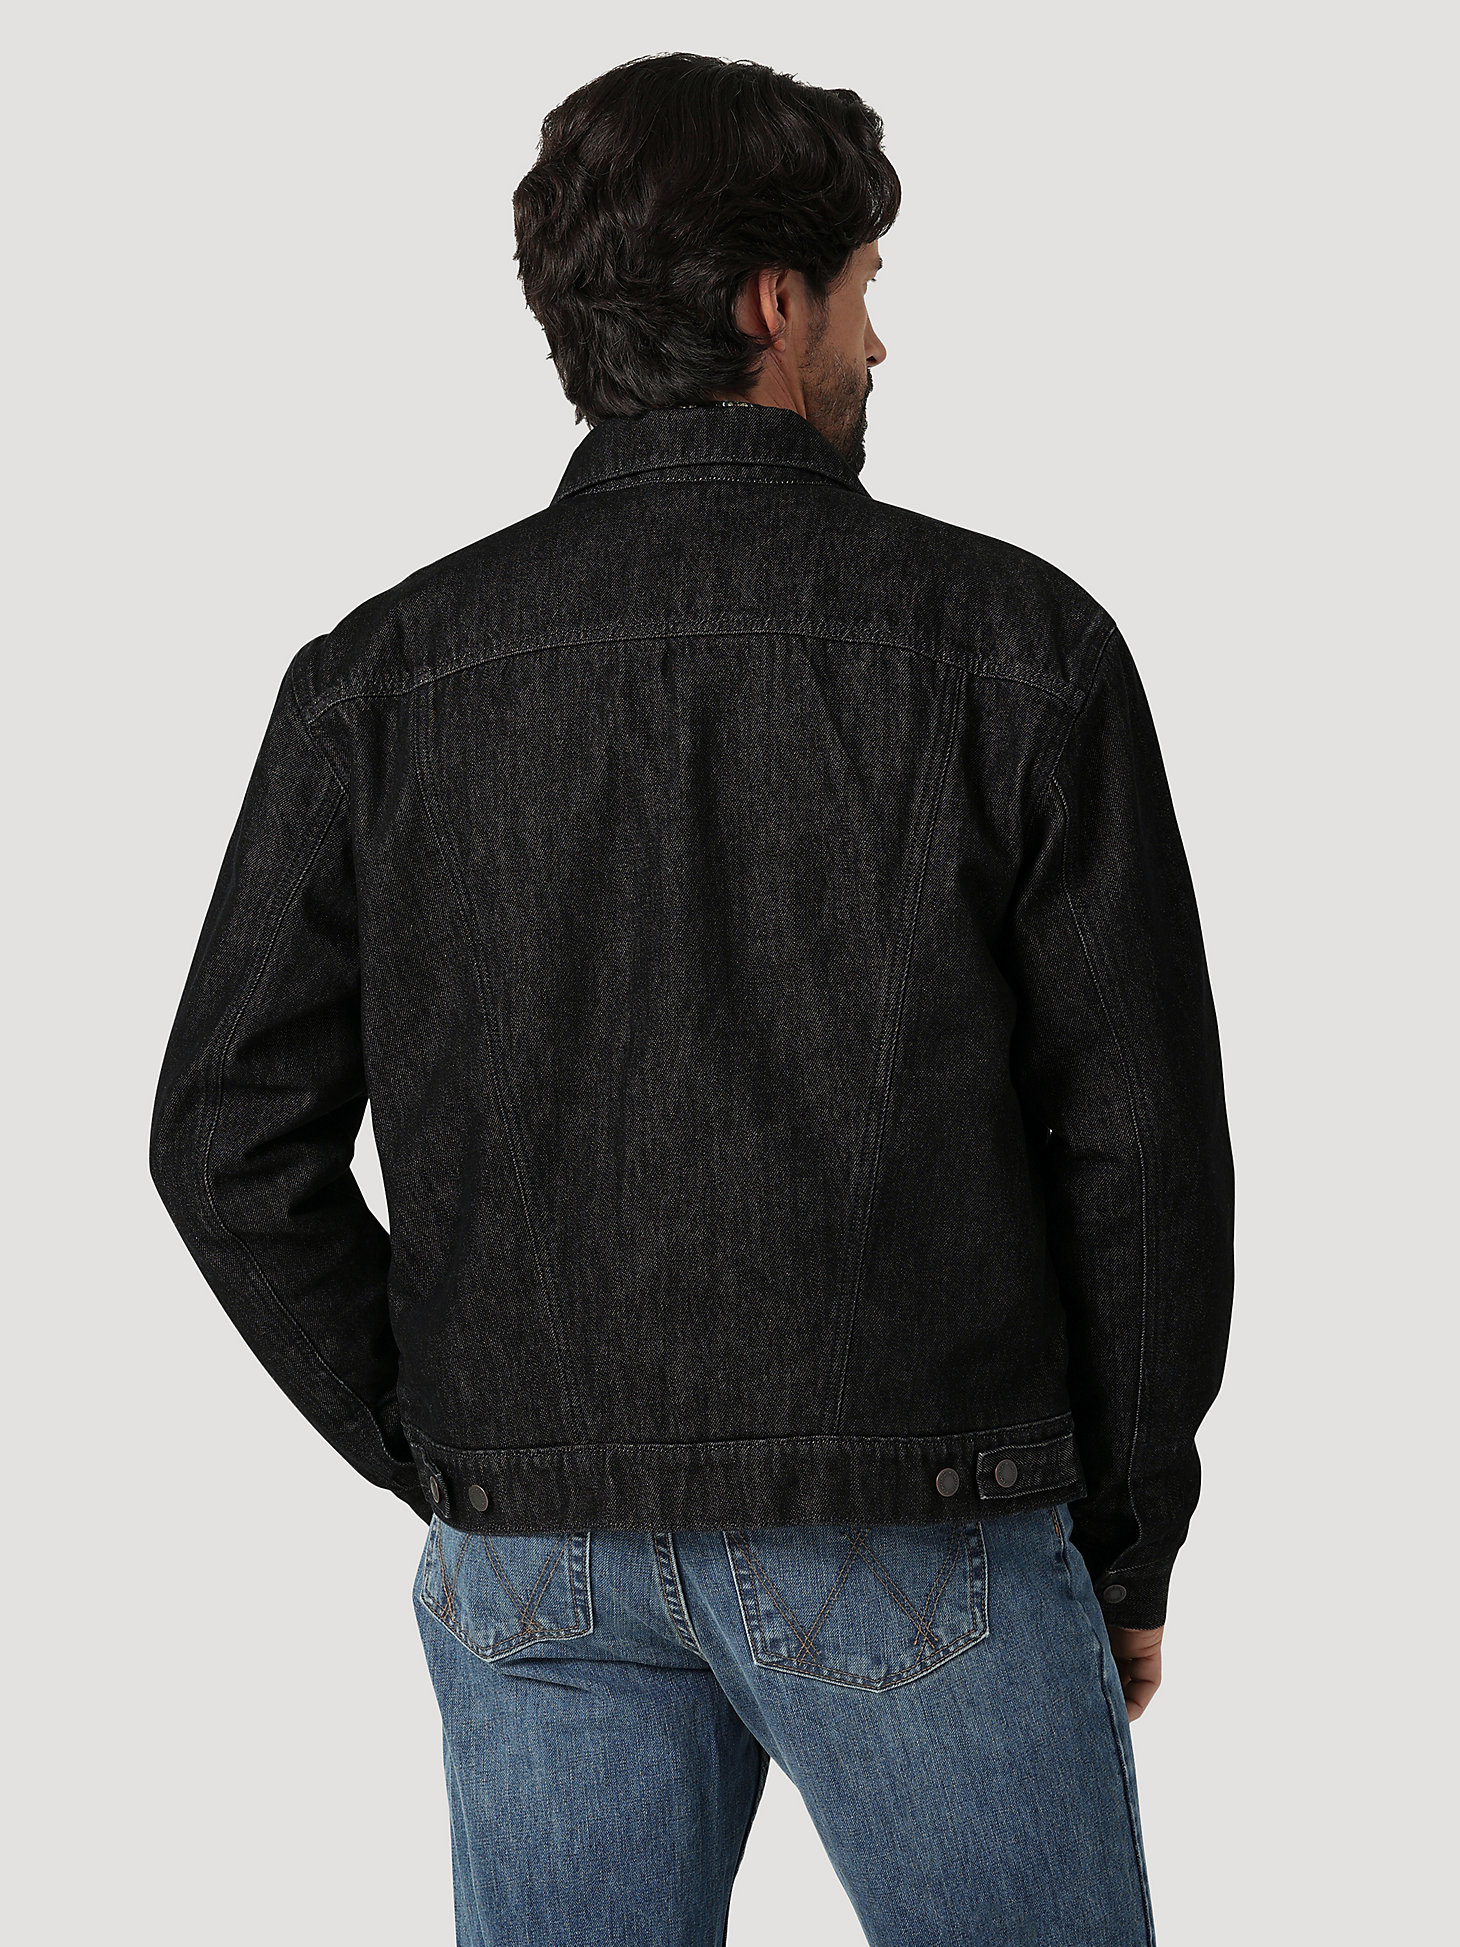 Wrangler® Cowboy Cut® Sherpa Lined Denim Jacket in Black Obelisk alternative view 1